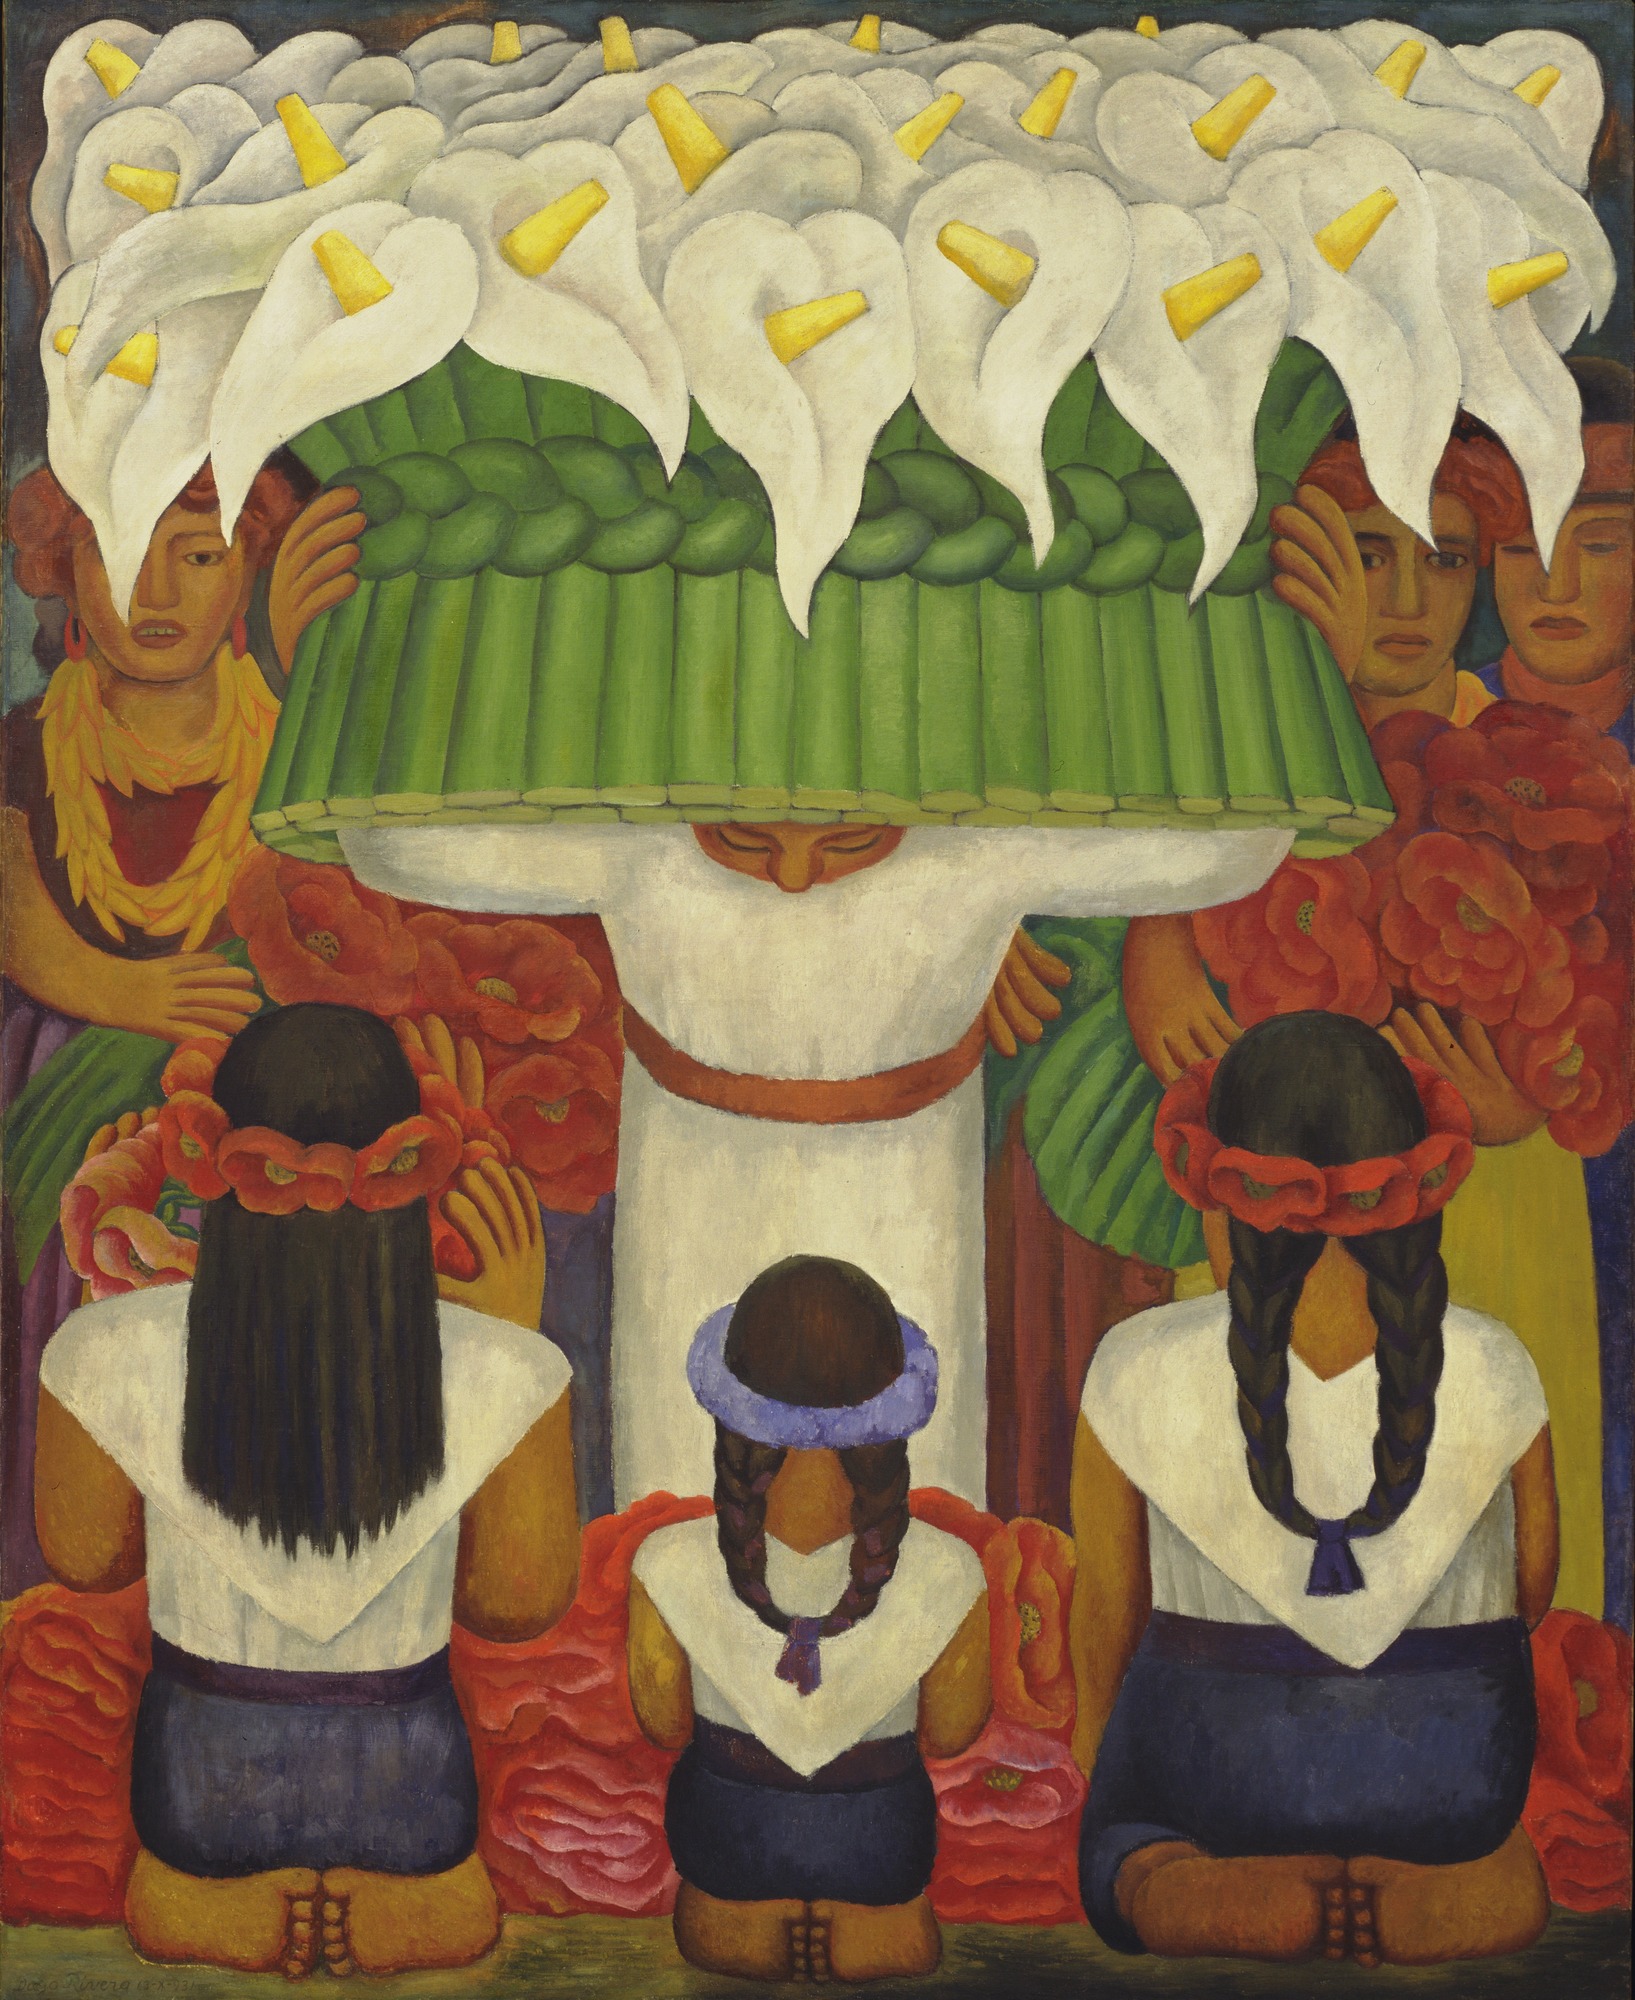 Flower Festival: Feast of Santa Anita by Diego Rivera - 1931 - 199.3 x 162.5 cm Museum of Modern Art